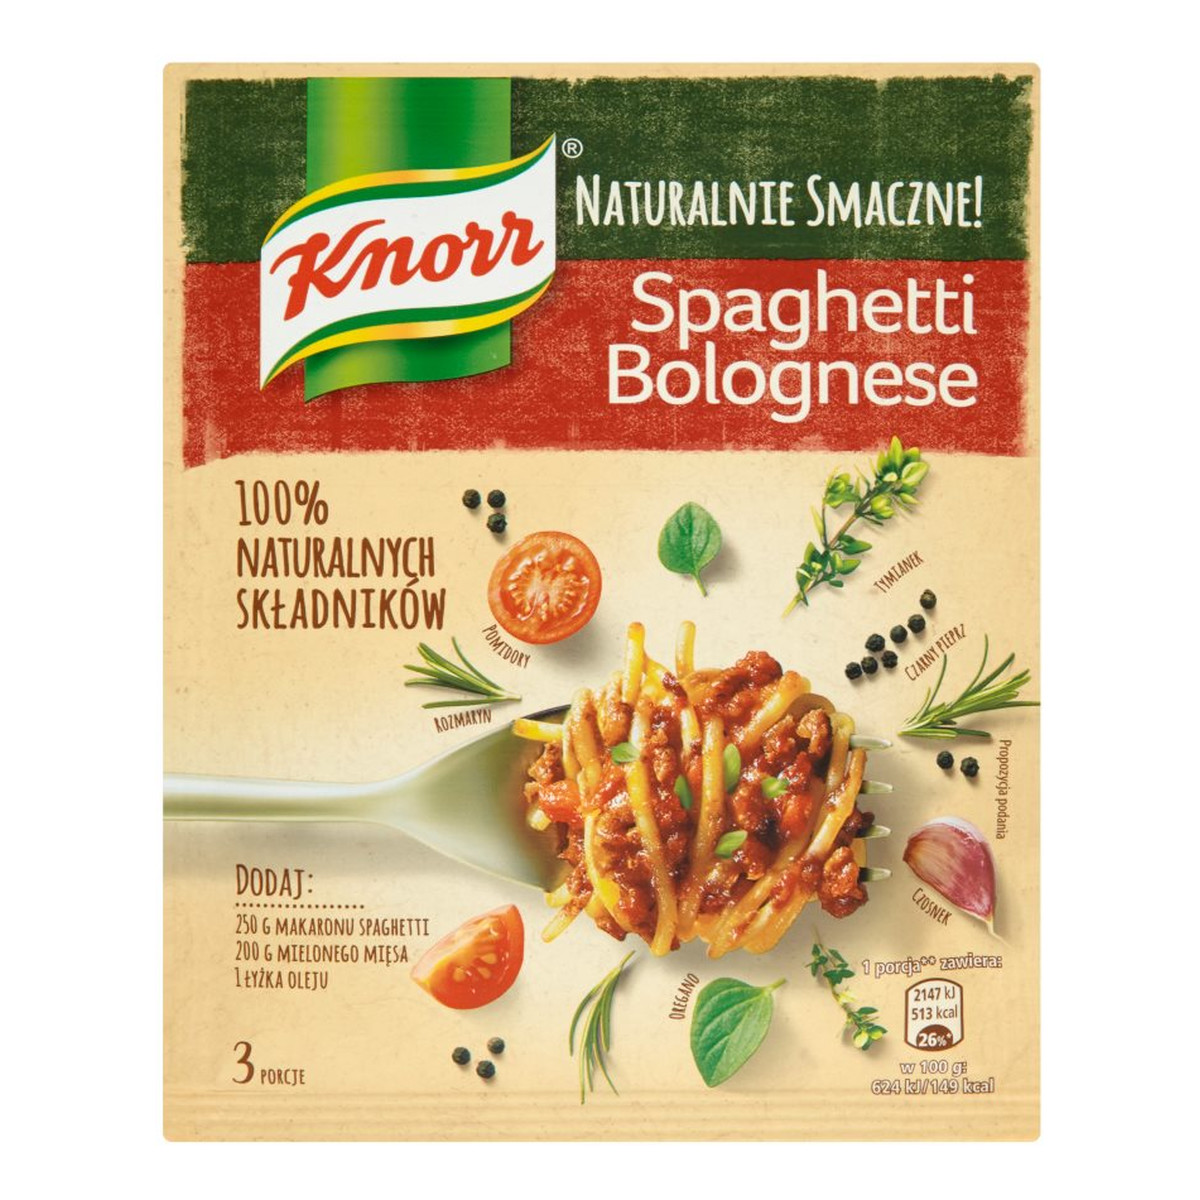 Knorr Naturalnie Smaczne! spaghetti Bolognese 43g